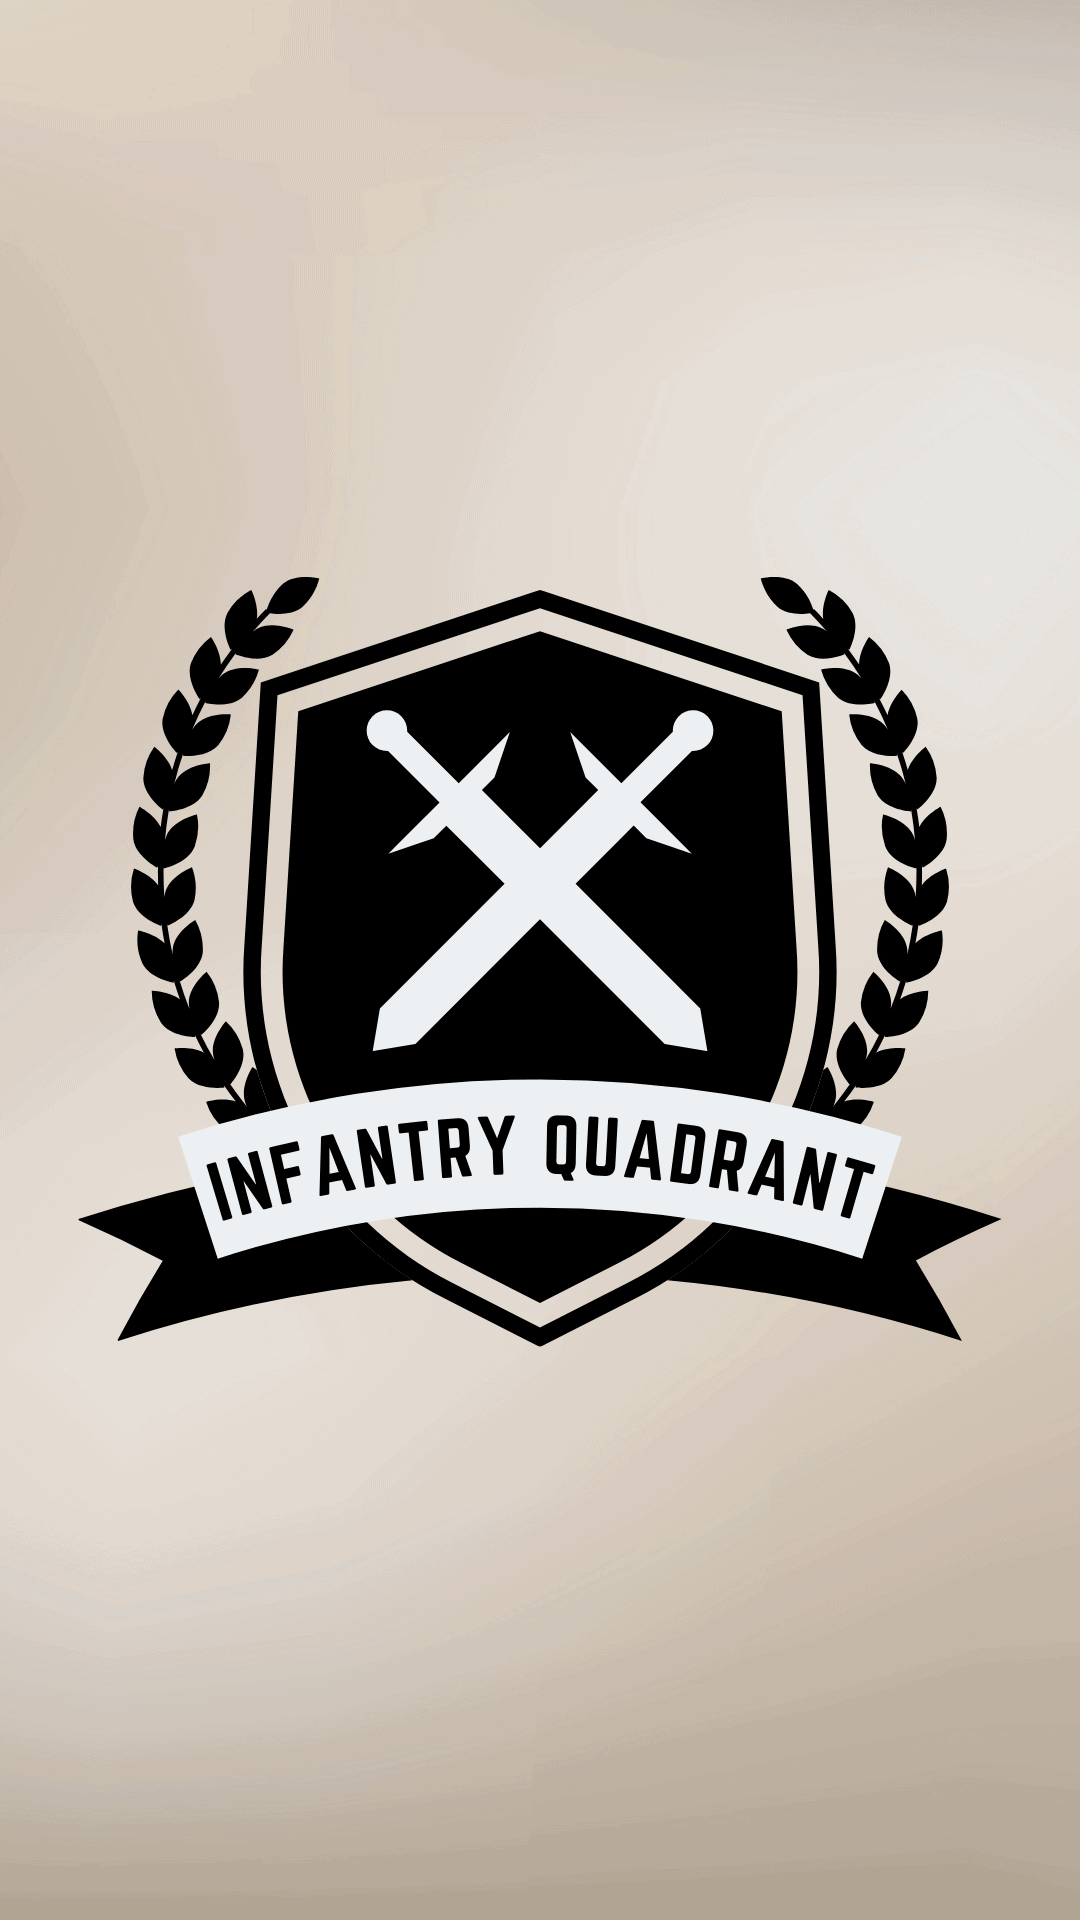 infantry quadrant crest.